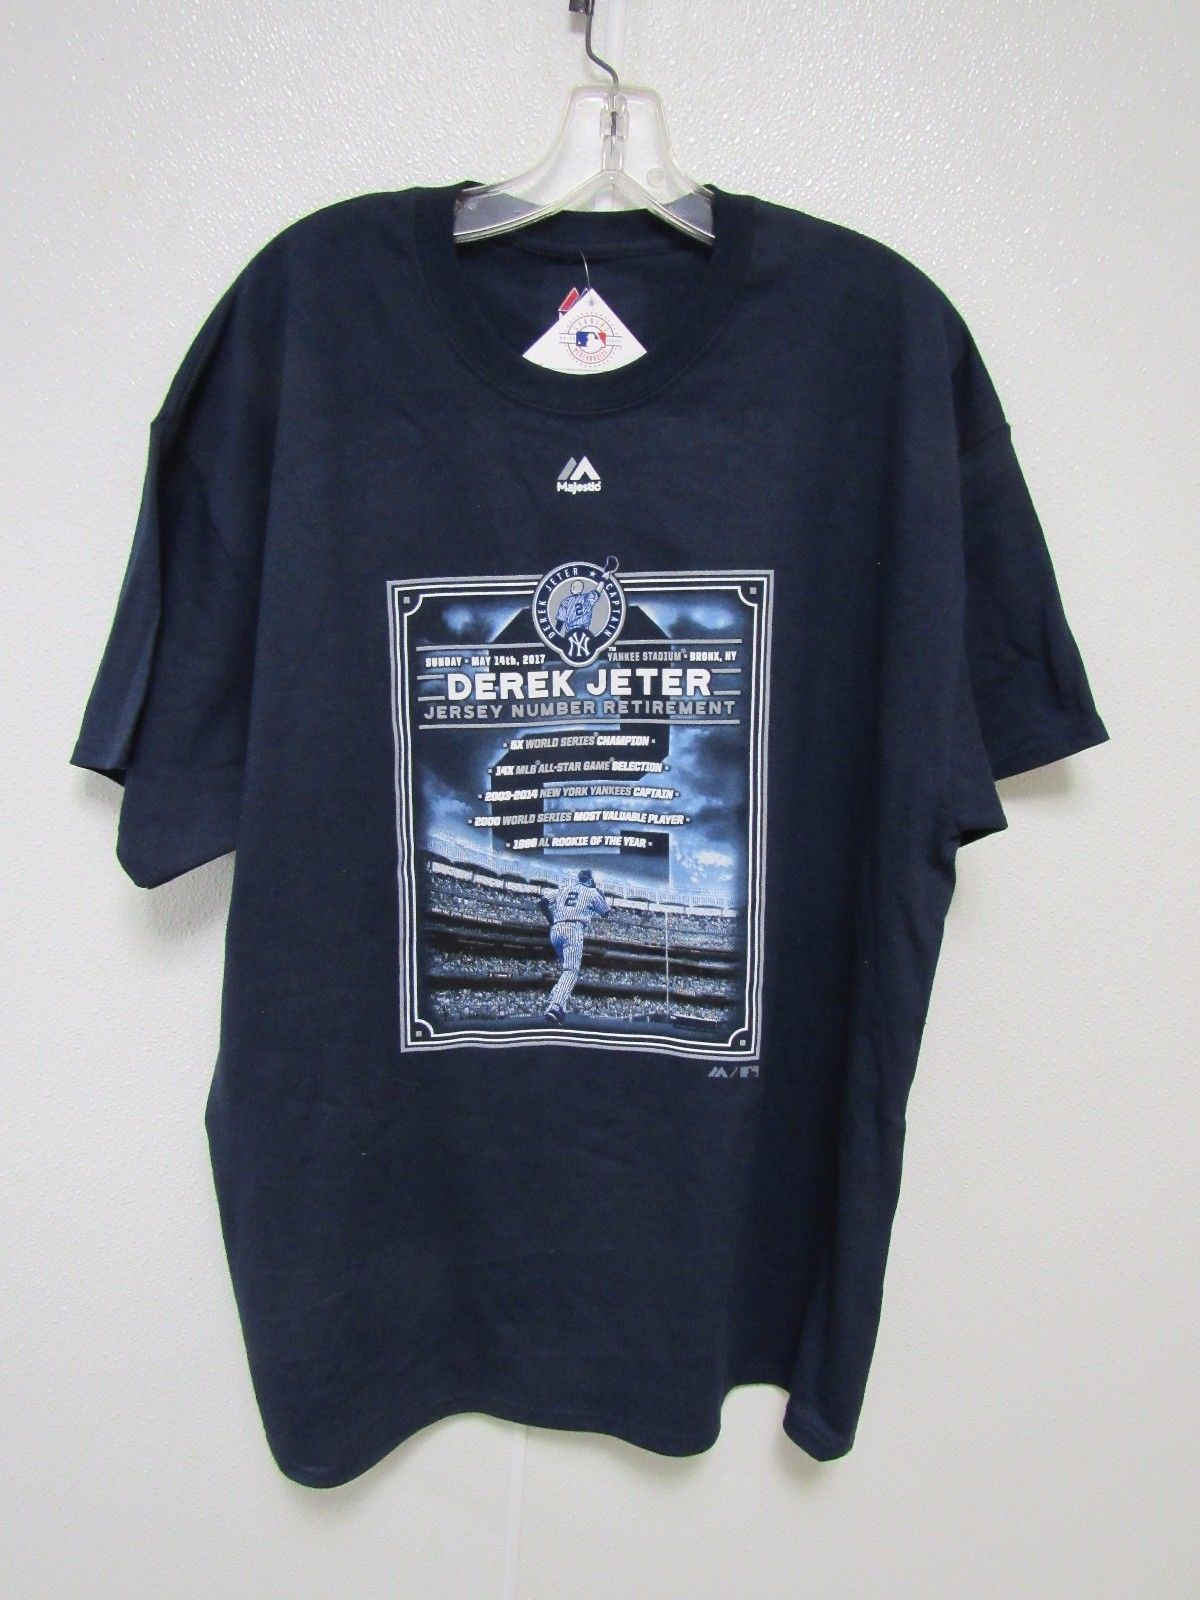 Milwaukee Brewers MLB Baseball Majestic Blue Adult XL Majestic T-Shirt